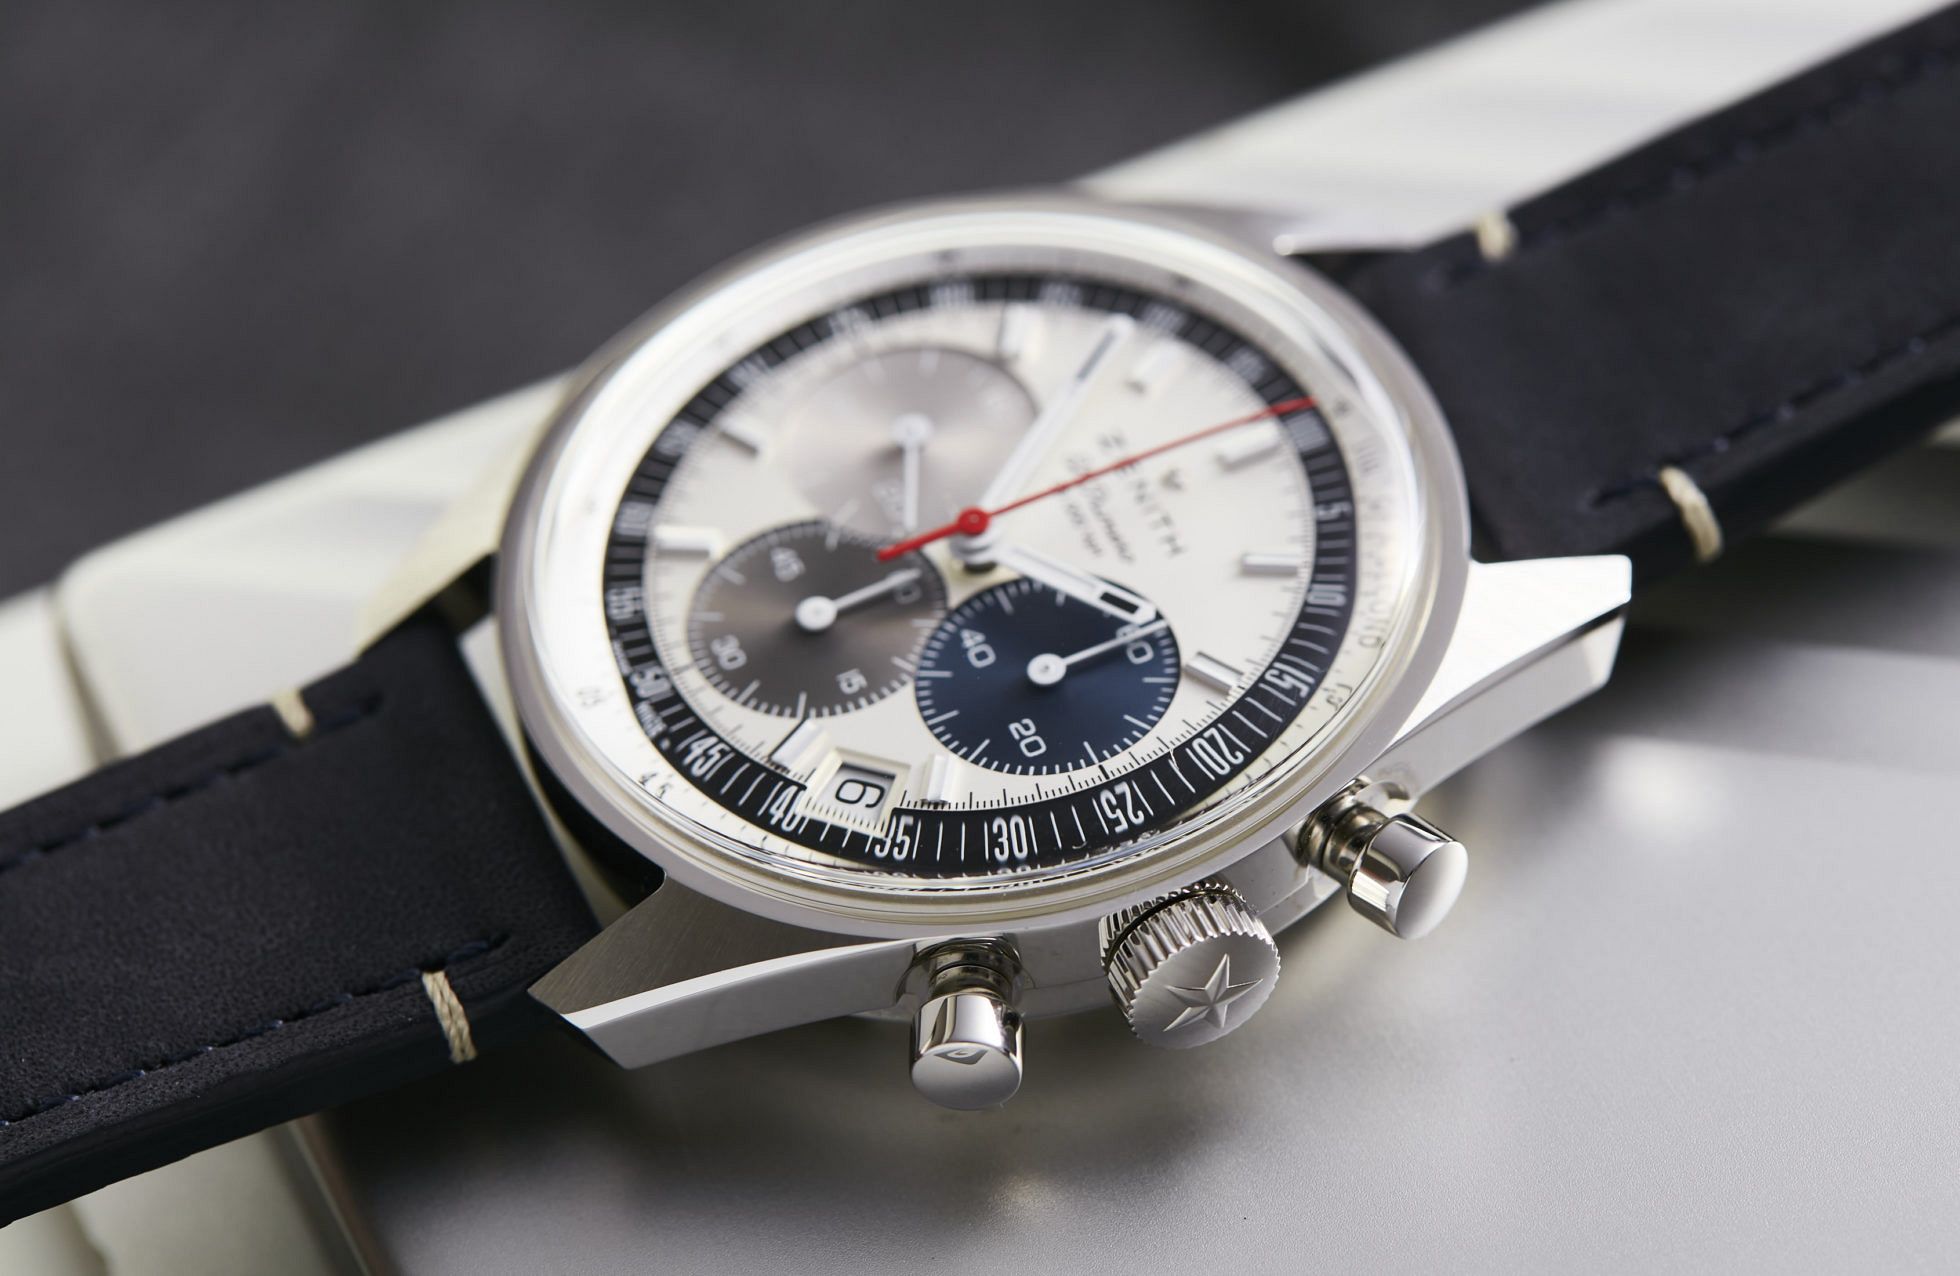 The Zenith Chronomaster Original White is a chronograph classic